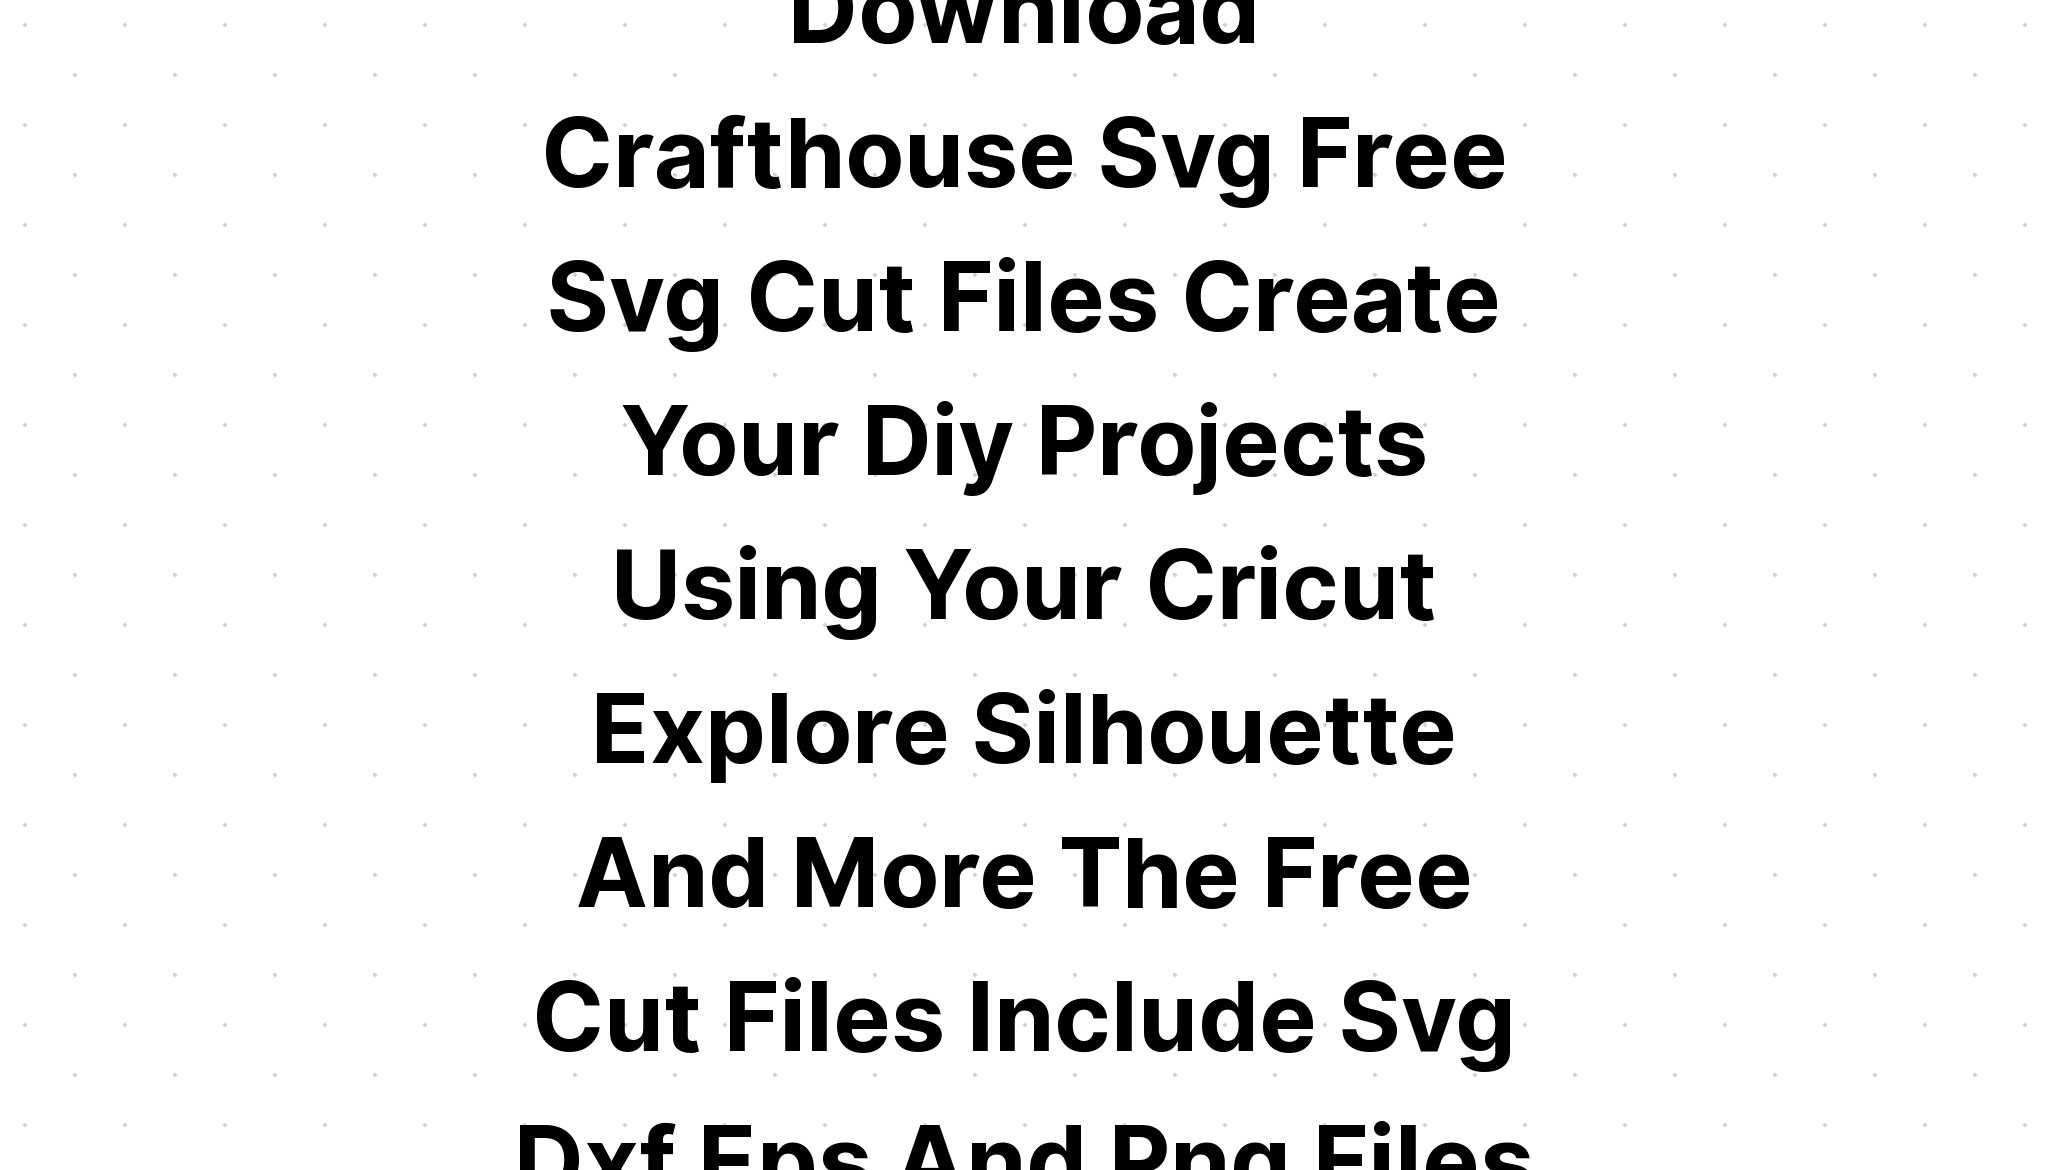 Download Mickey Mouse 3D Mandala Svg - Layered SVG Cut File